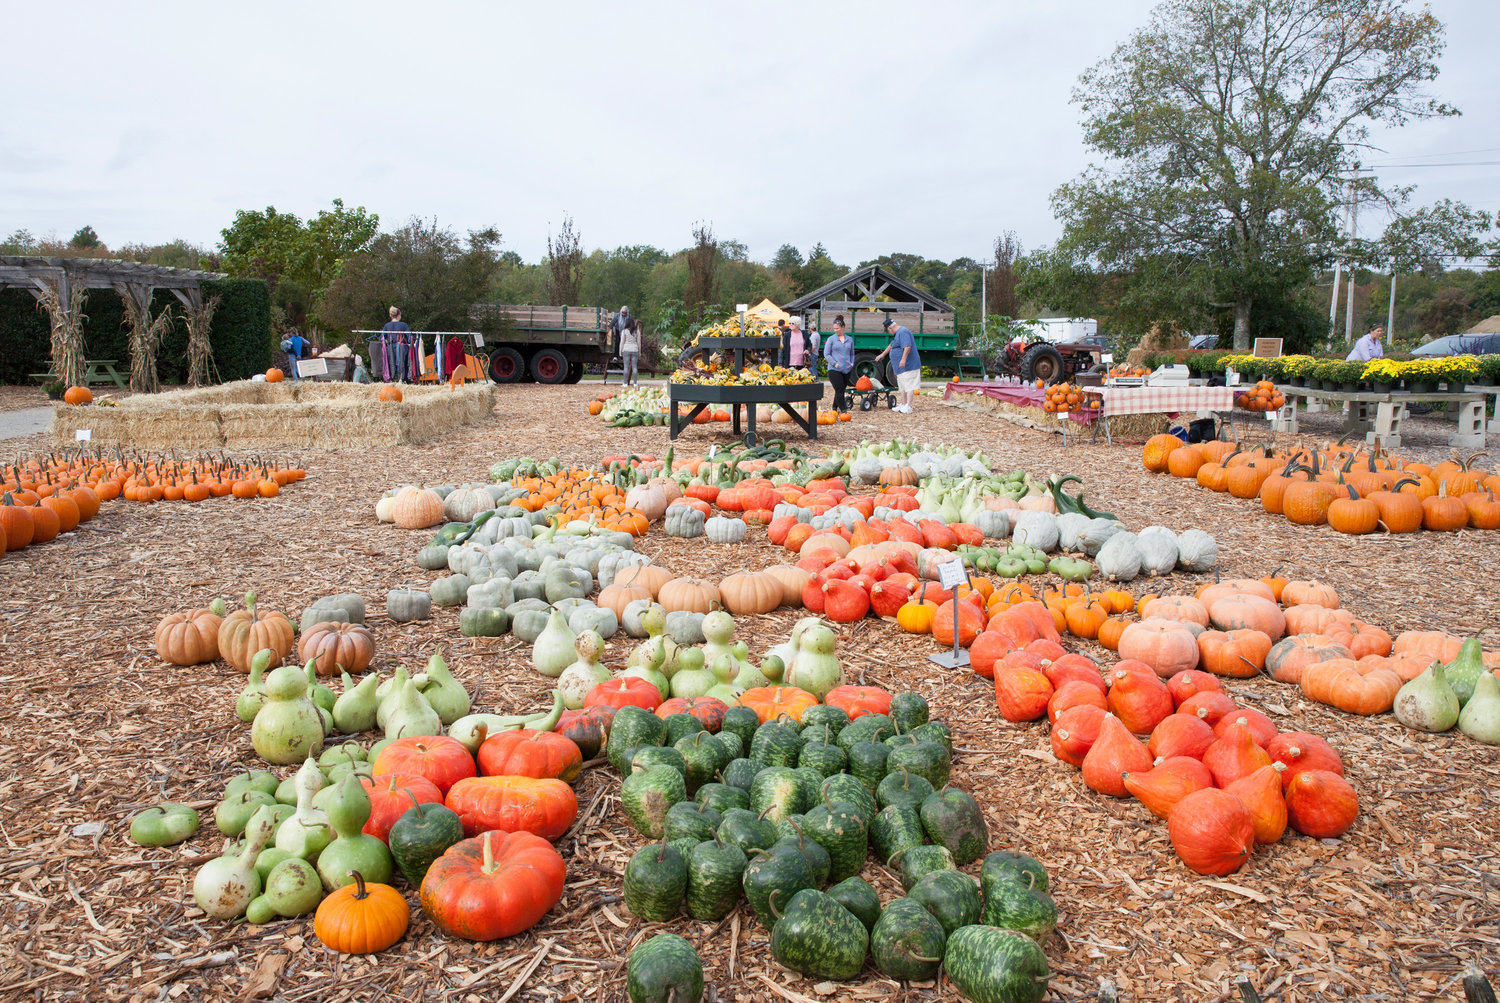 The Farmer’s Daughter hosts the Fall Harvest Fest all season